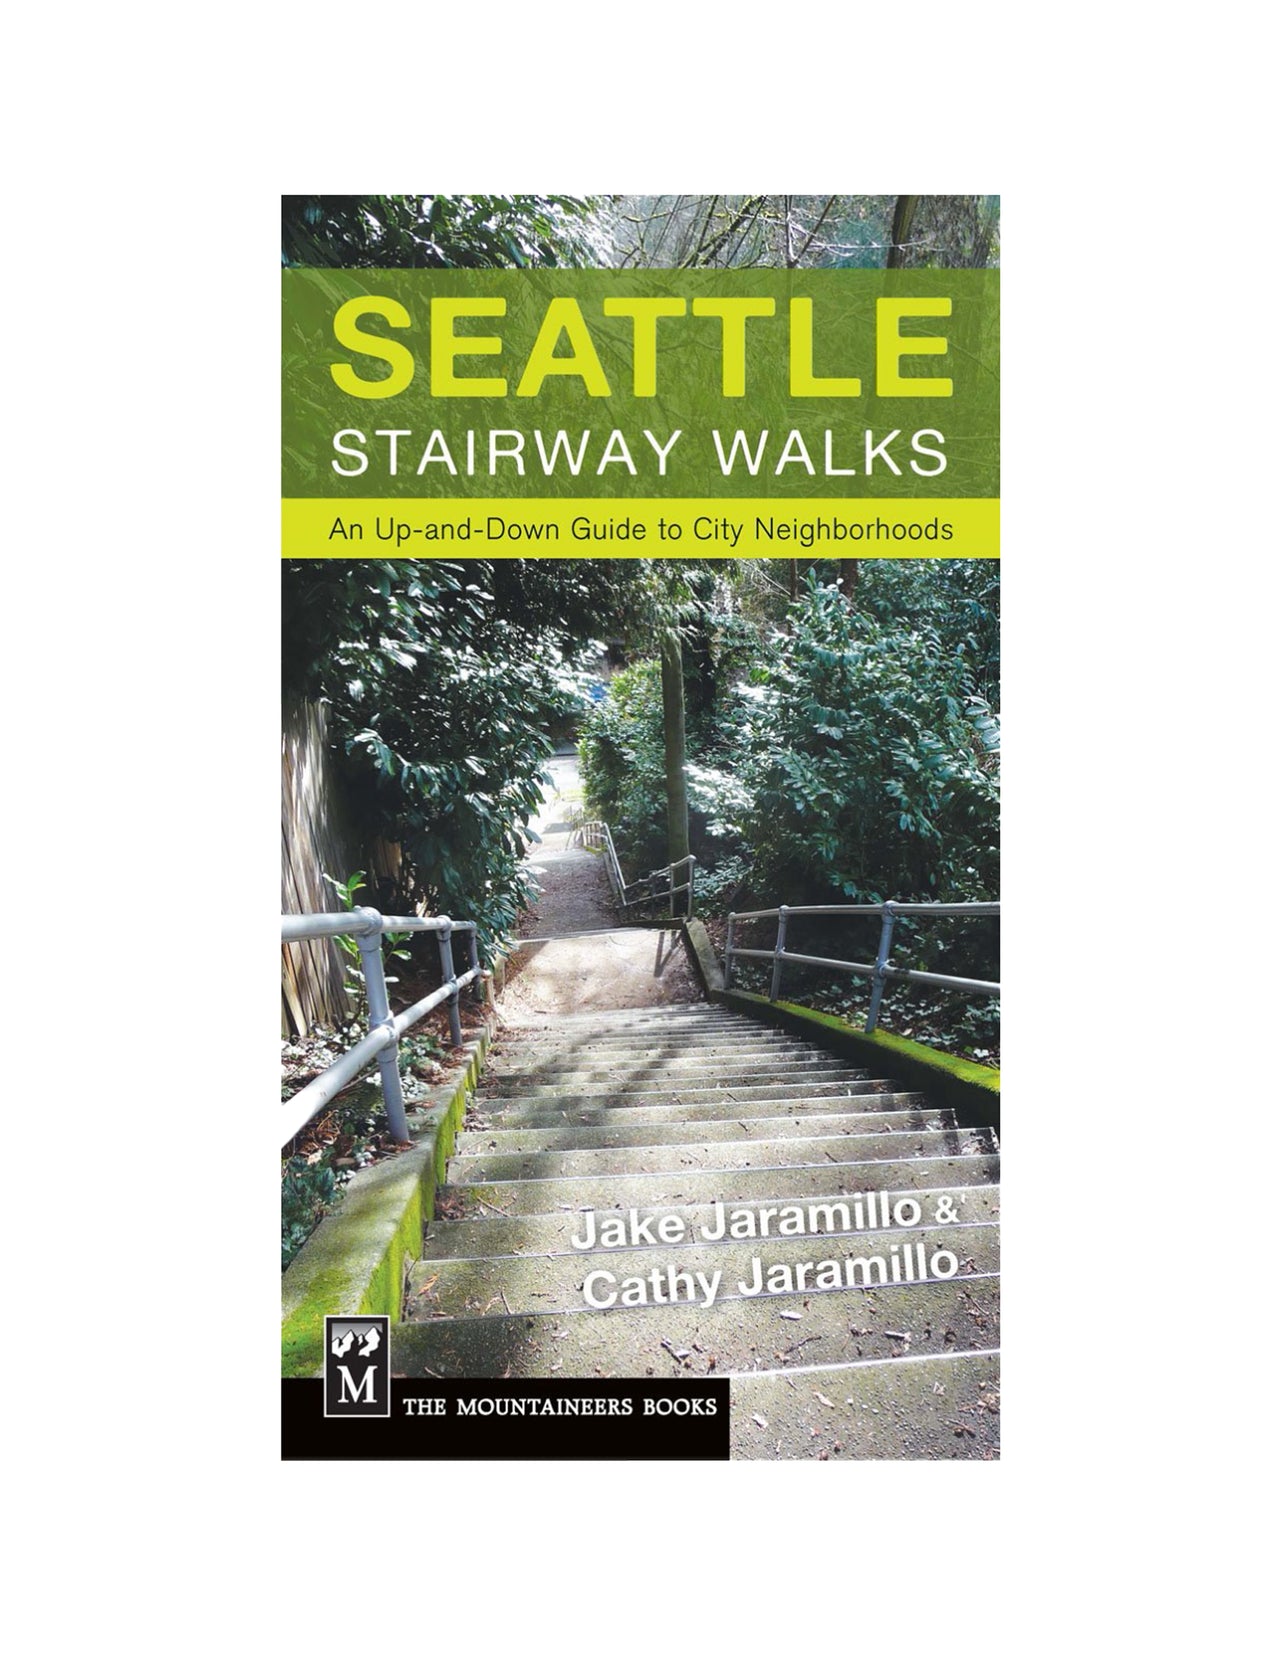 Seattle Stairway Walks